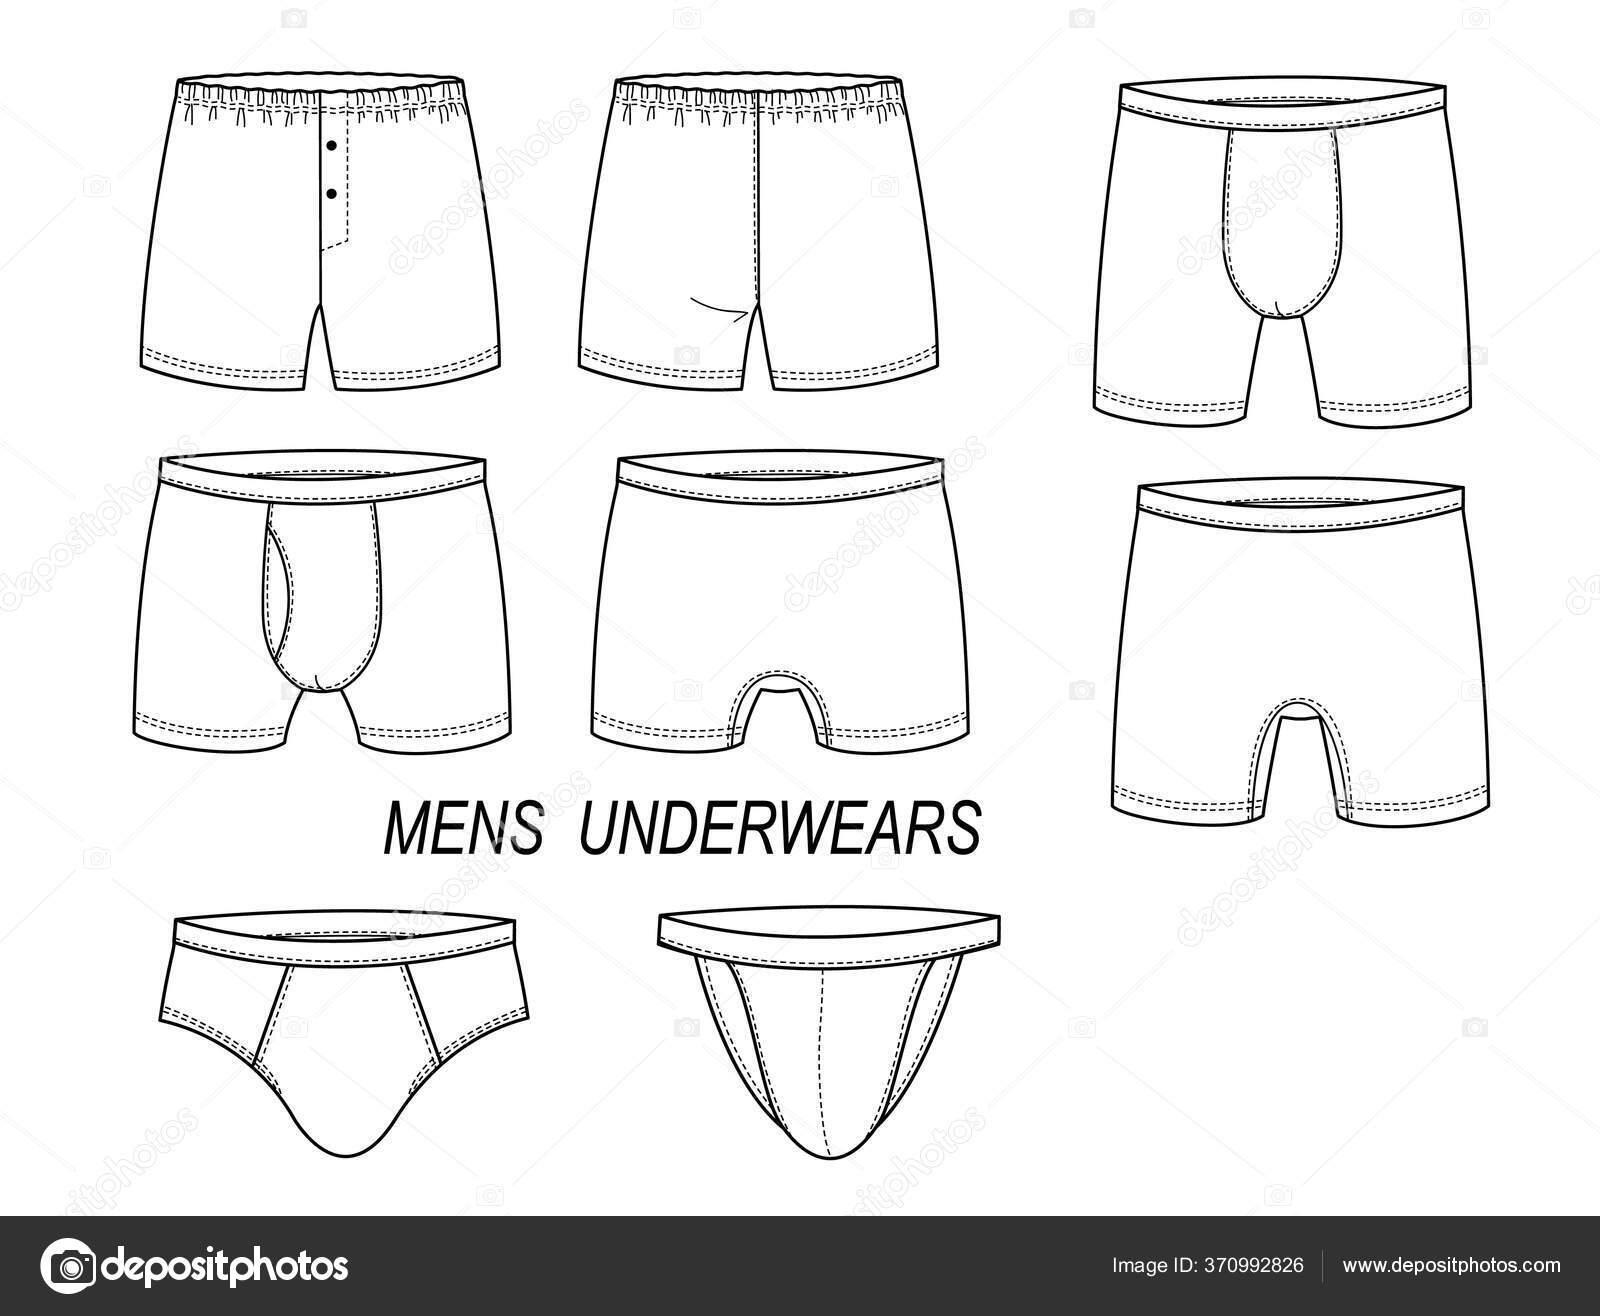 https://st3.depositphotos.com/2184283/37099/v/1600/depositphotos_370992826-stock-illustration-men-underwear-pants-vector-set.jpg